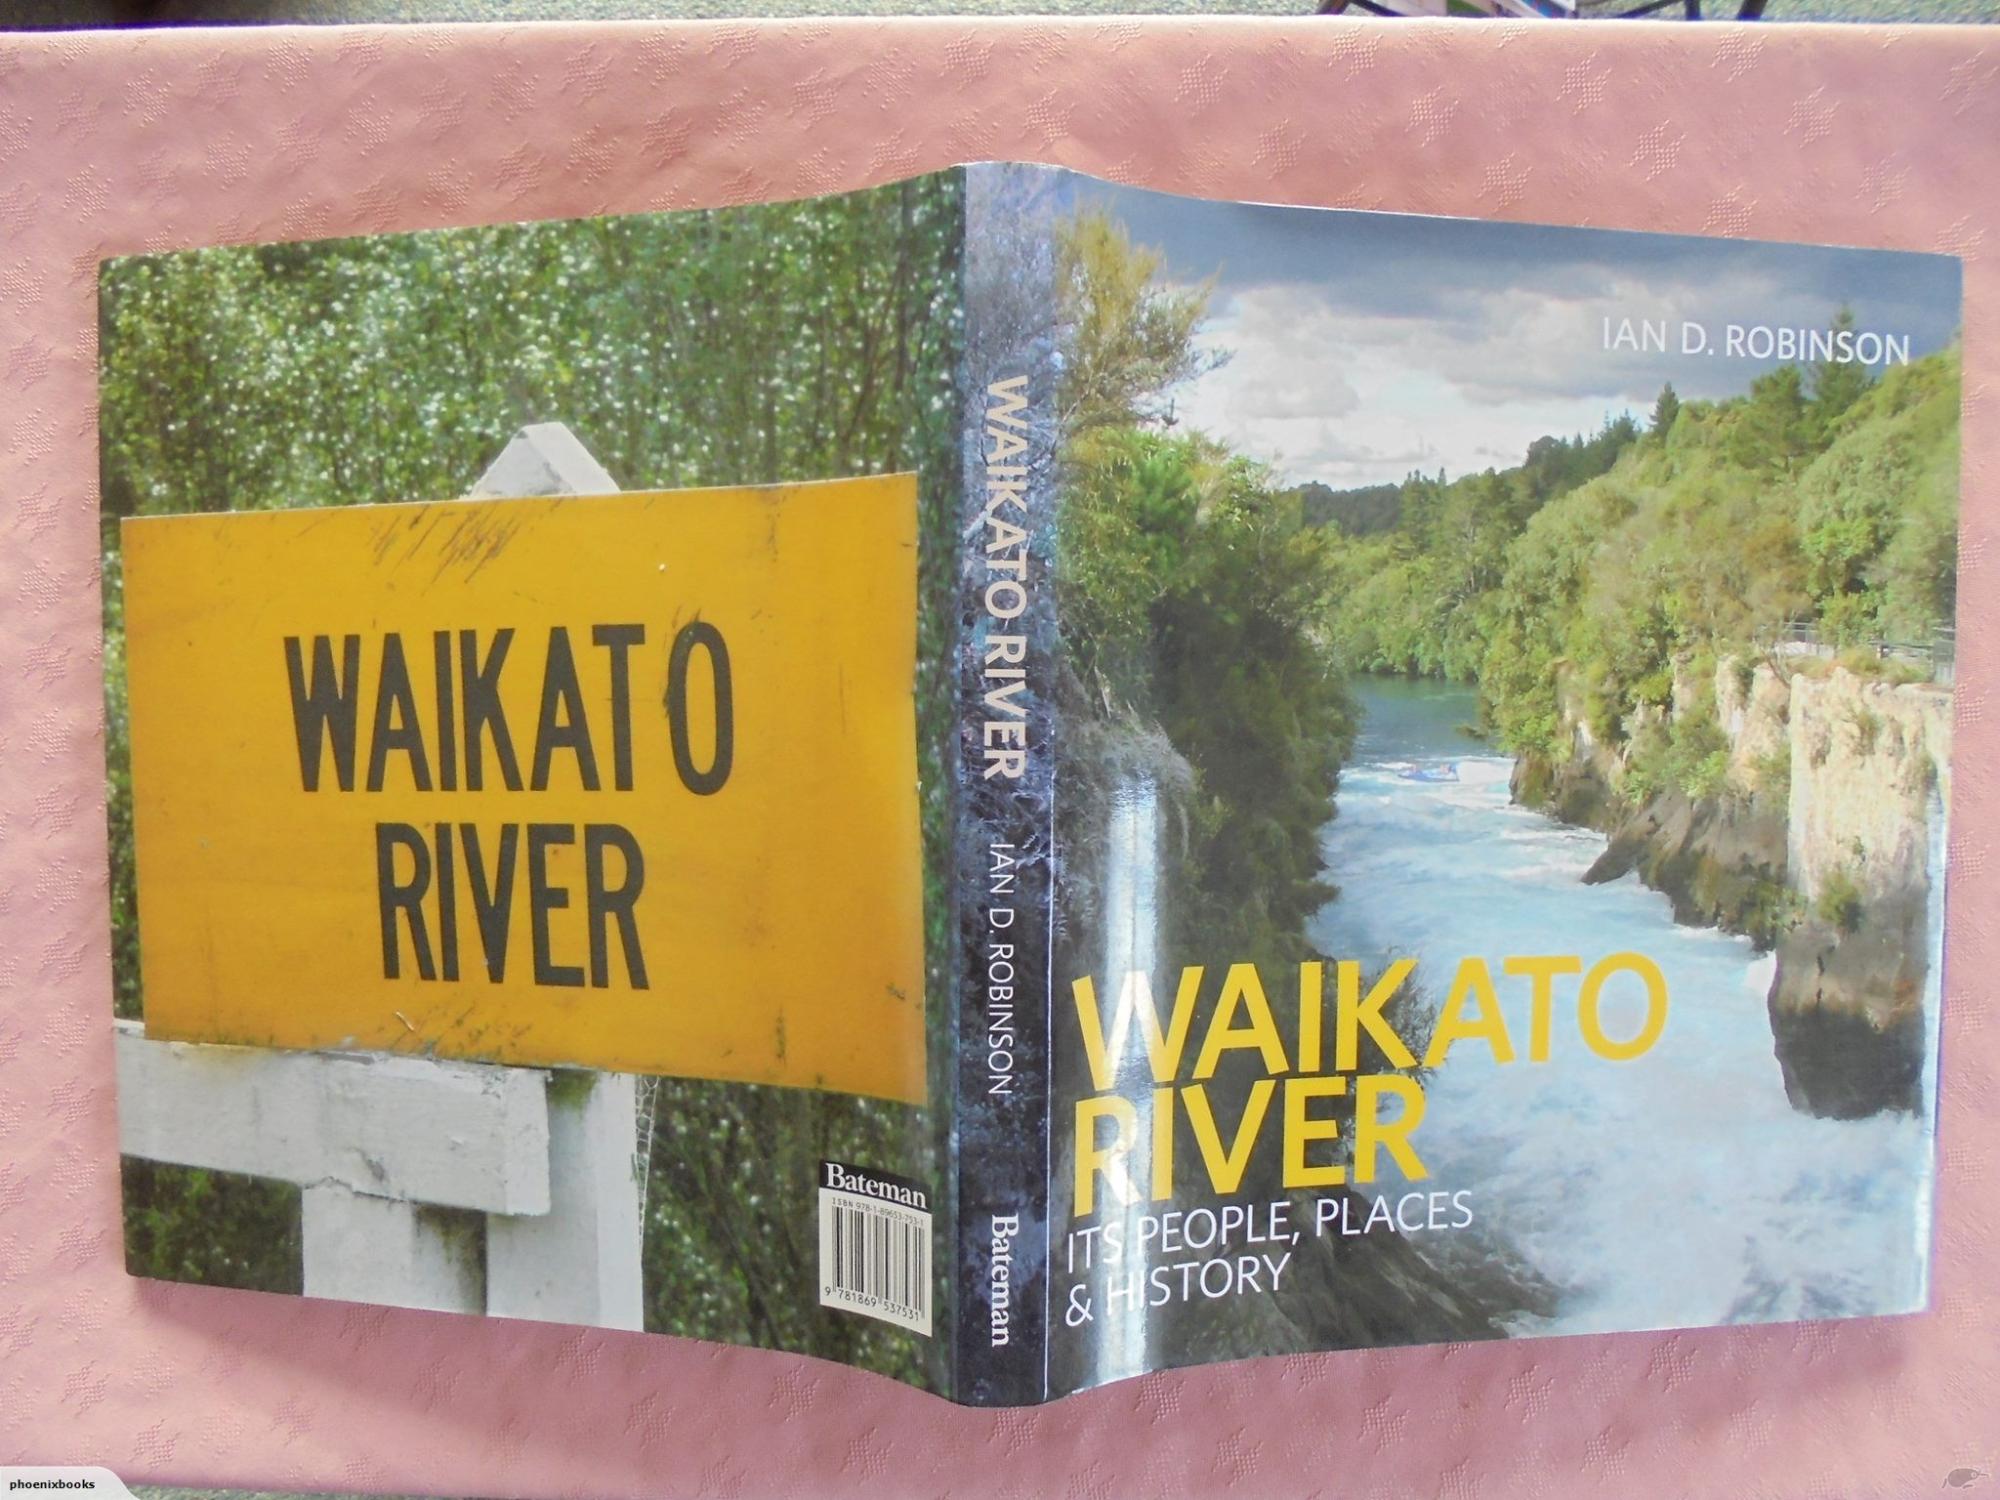 Waikato River - ITS PEOPLE, PLACES & HISTORY. - Ian D. Robinson